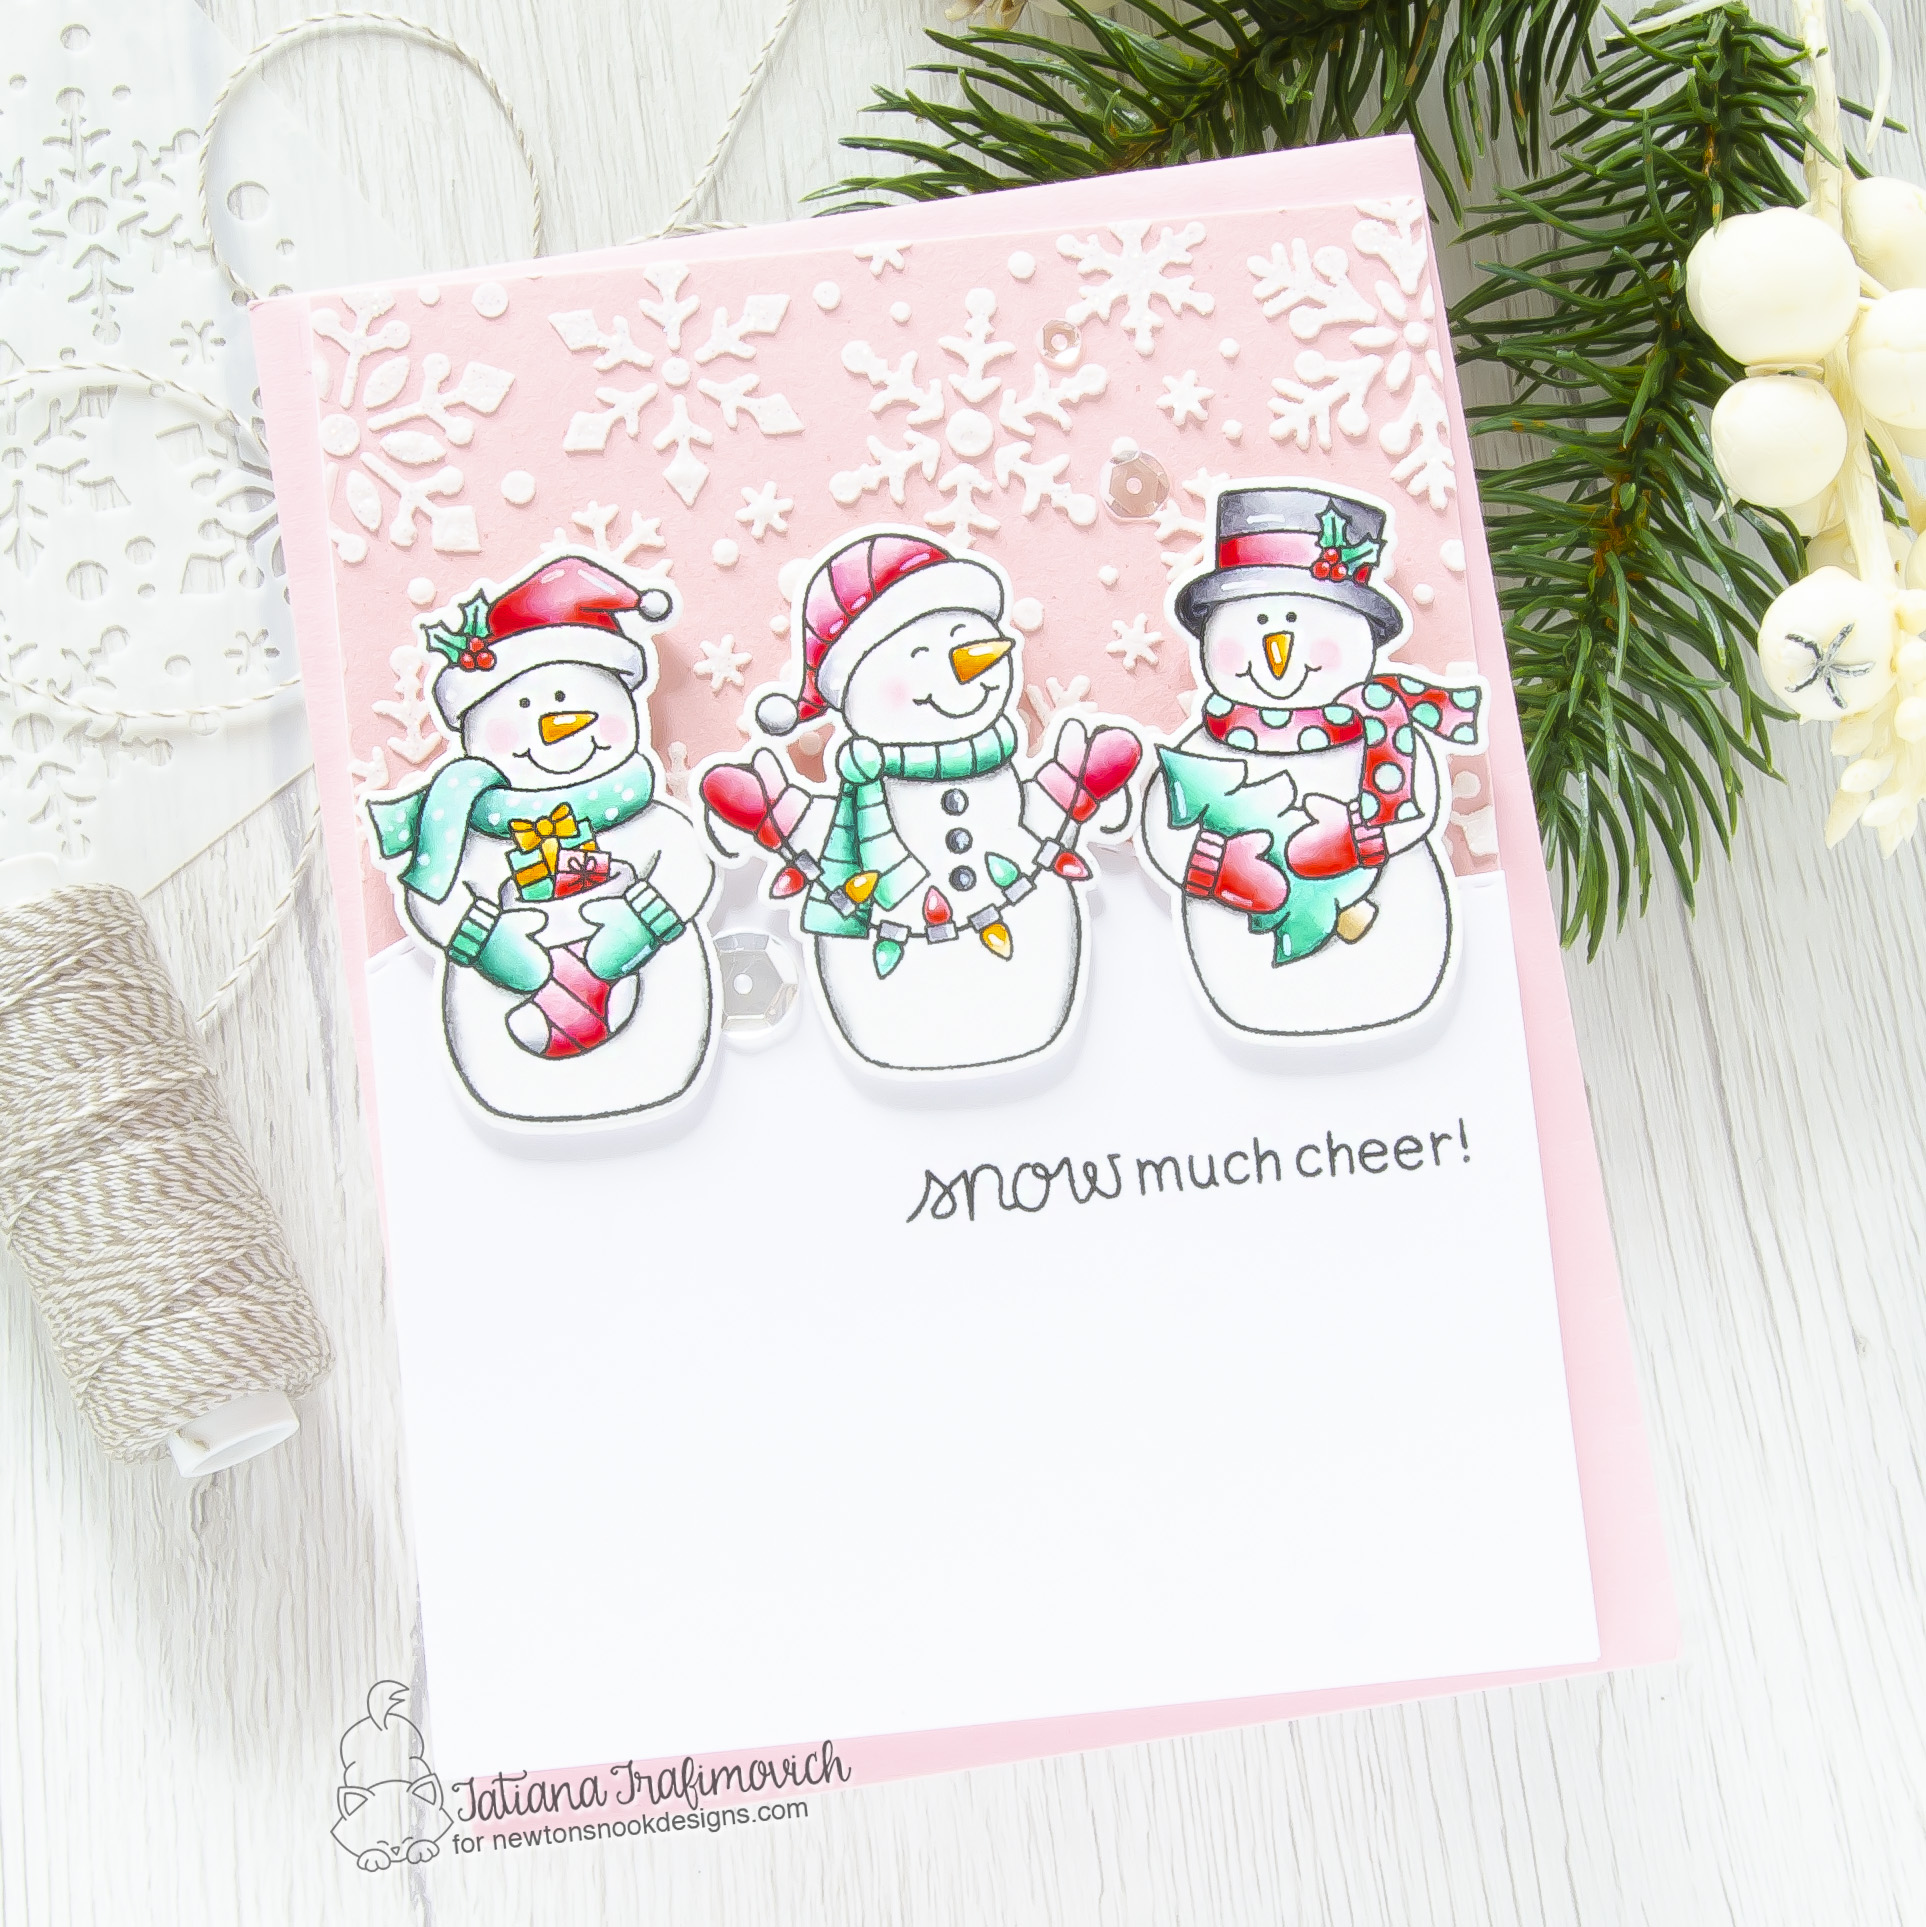 Snow Much Cheer #handmade card by Tatiana Trafimovich #tatianacraftandart - Snow Much Cheer stamp set by Newton's Nook Designs #newtonsnook